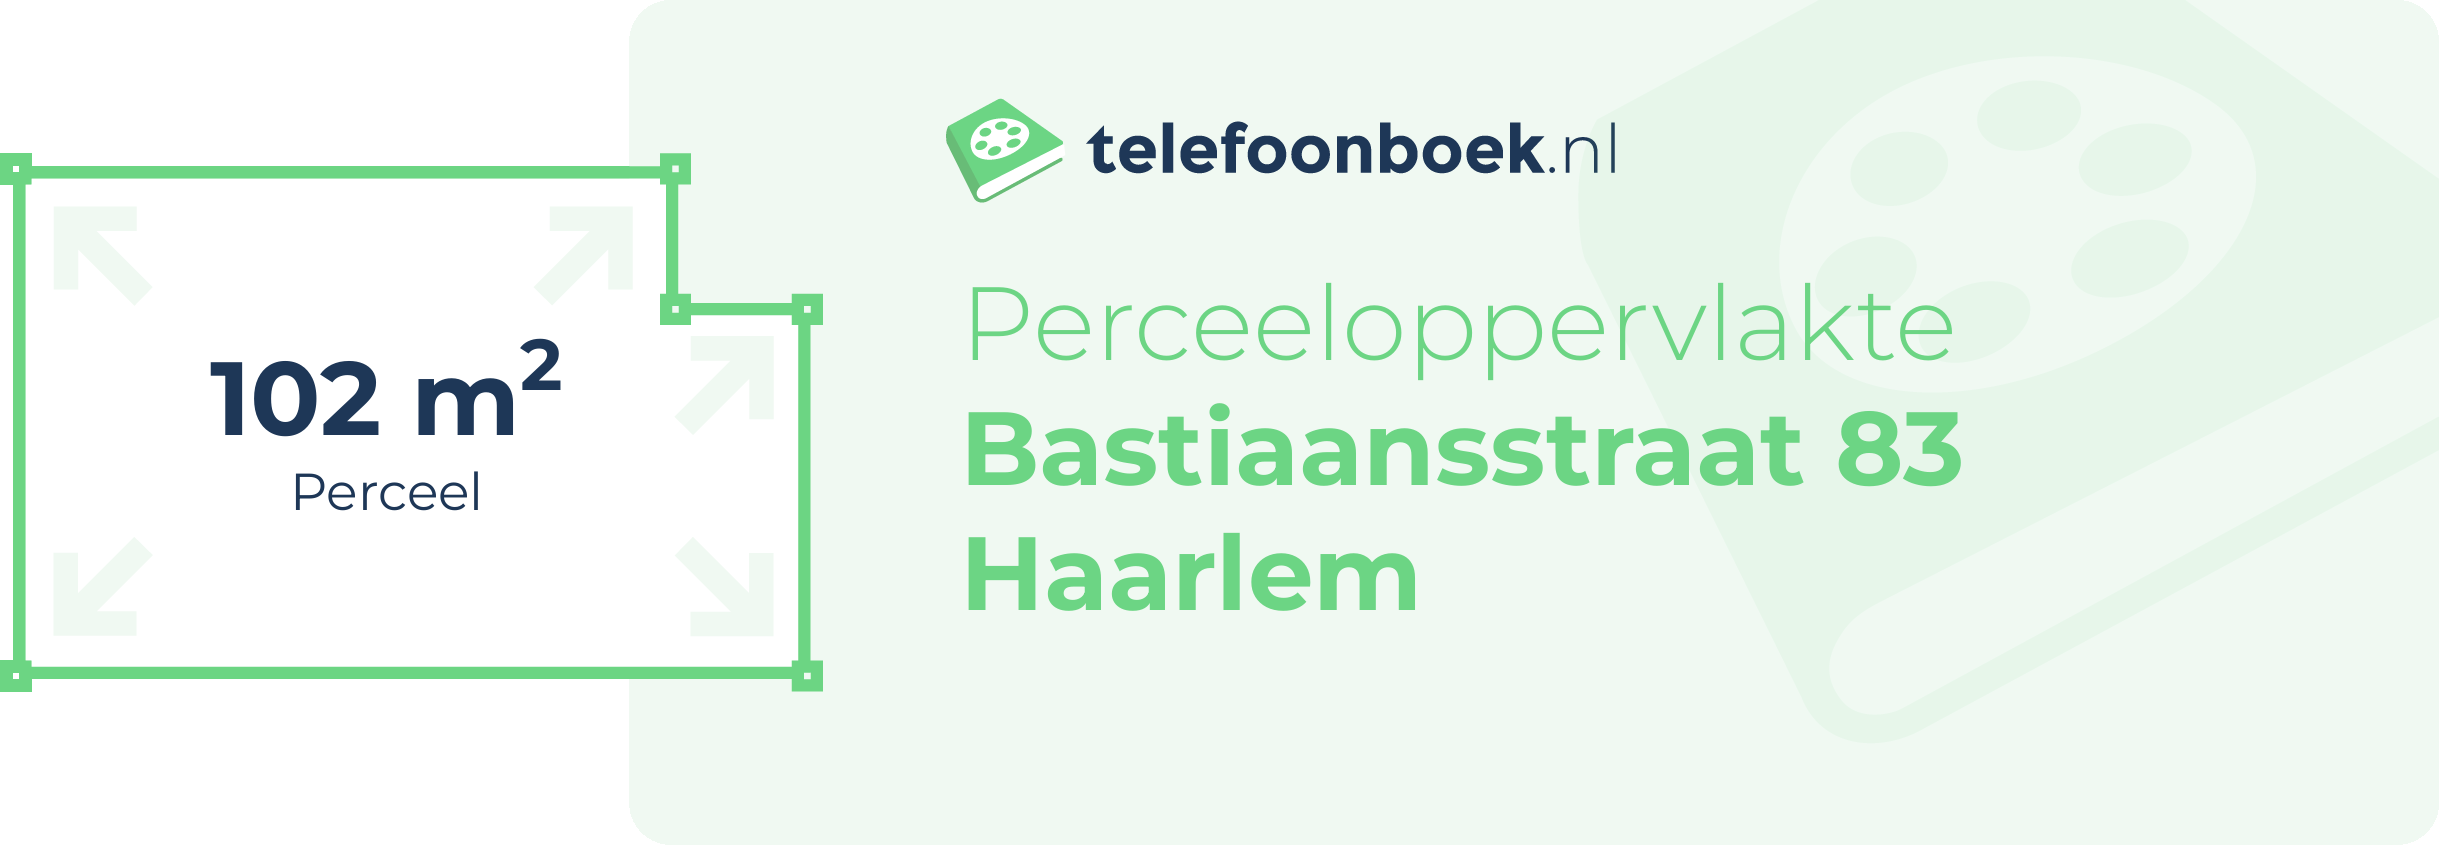 Perceeloppervlakte Bastiaansstraat 83 Haarlem